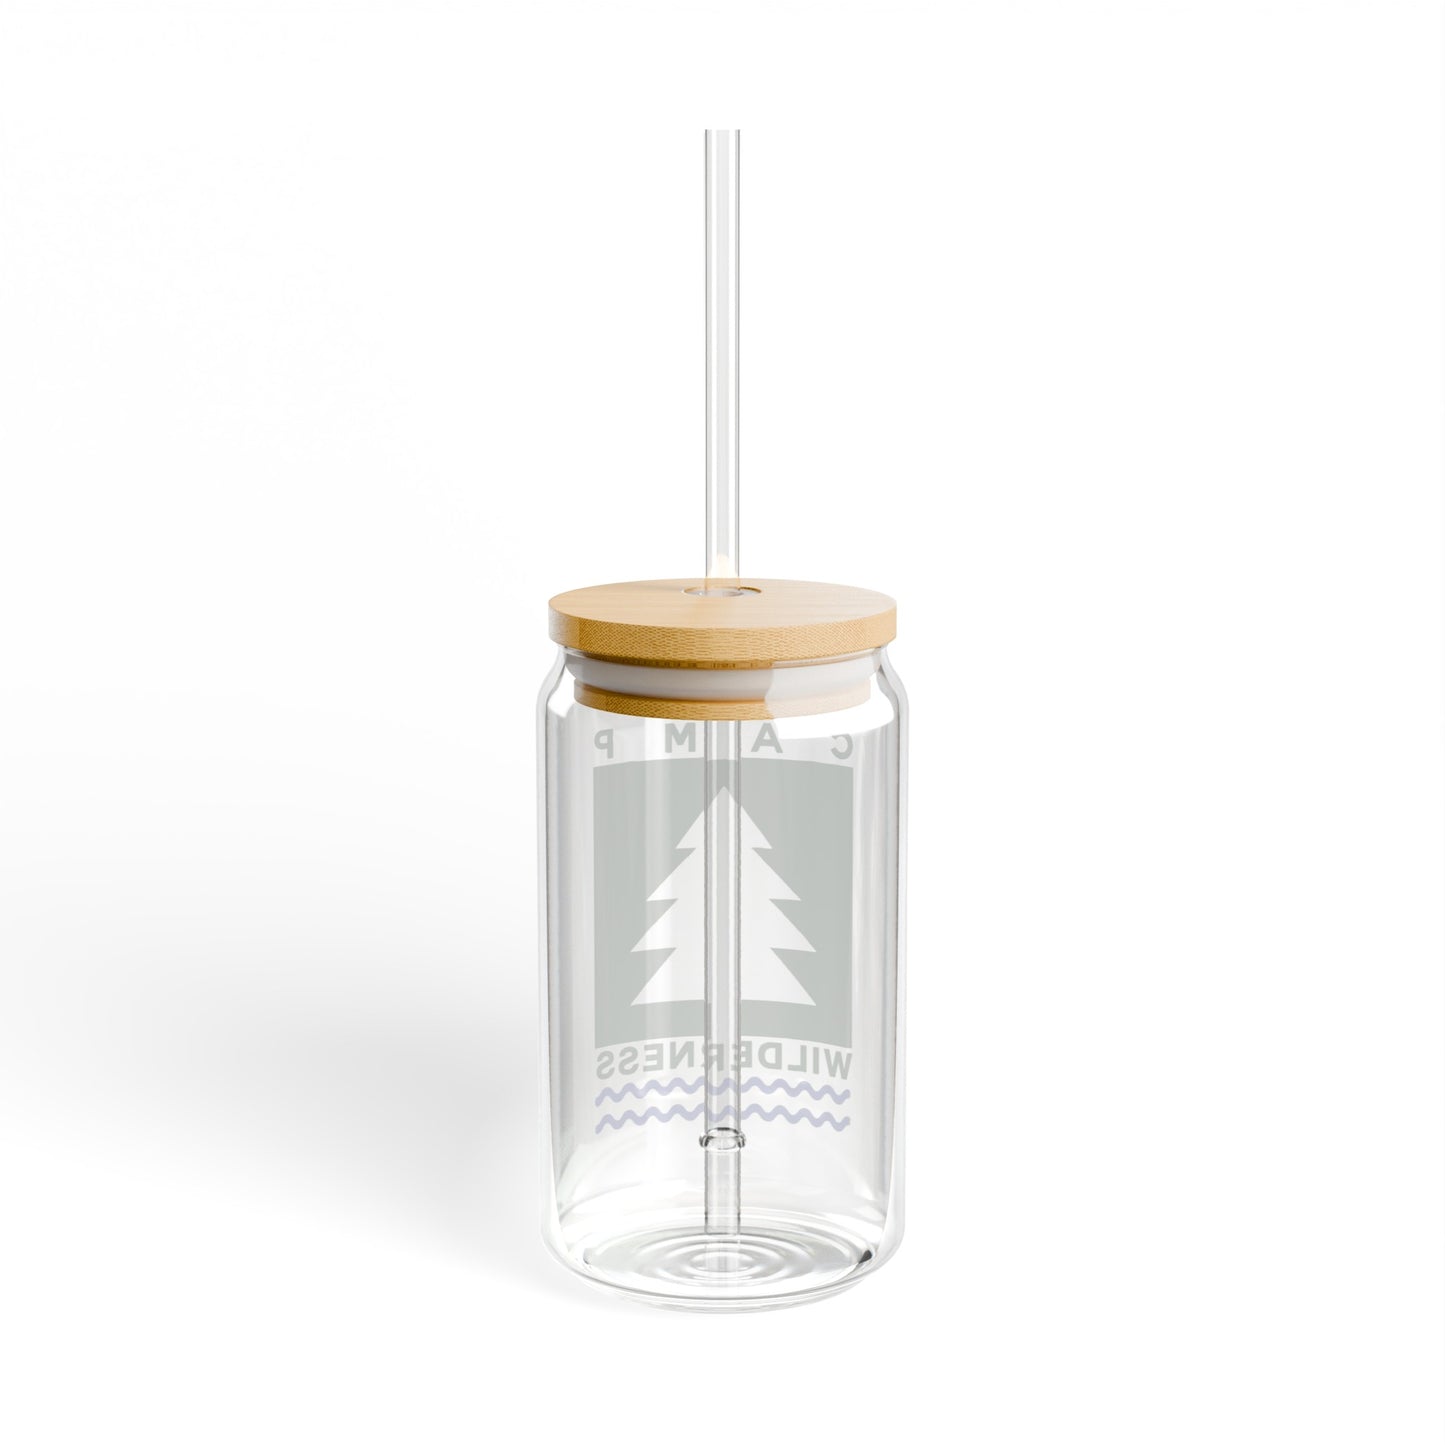 Camp Wilderness - Fort Wilderness - Sipper Glass, 16oz